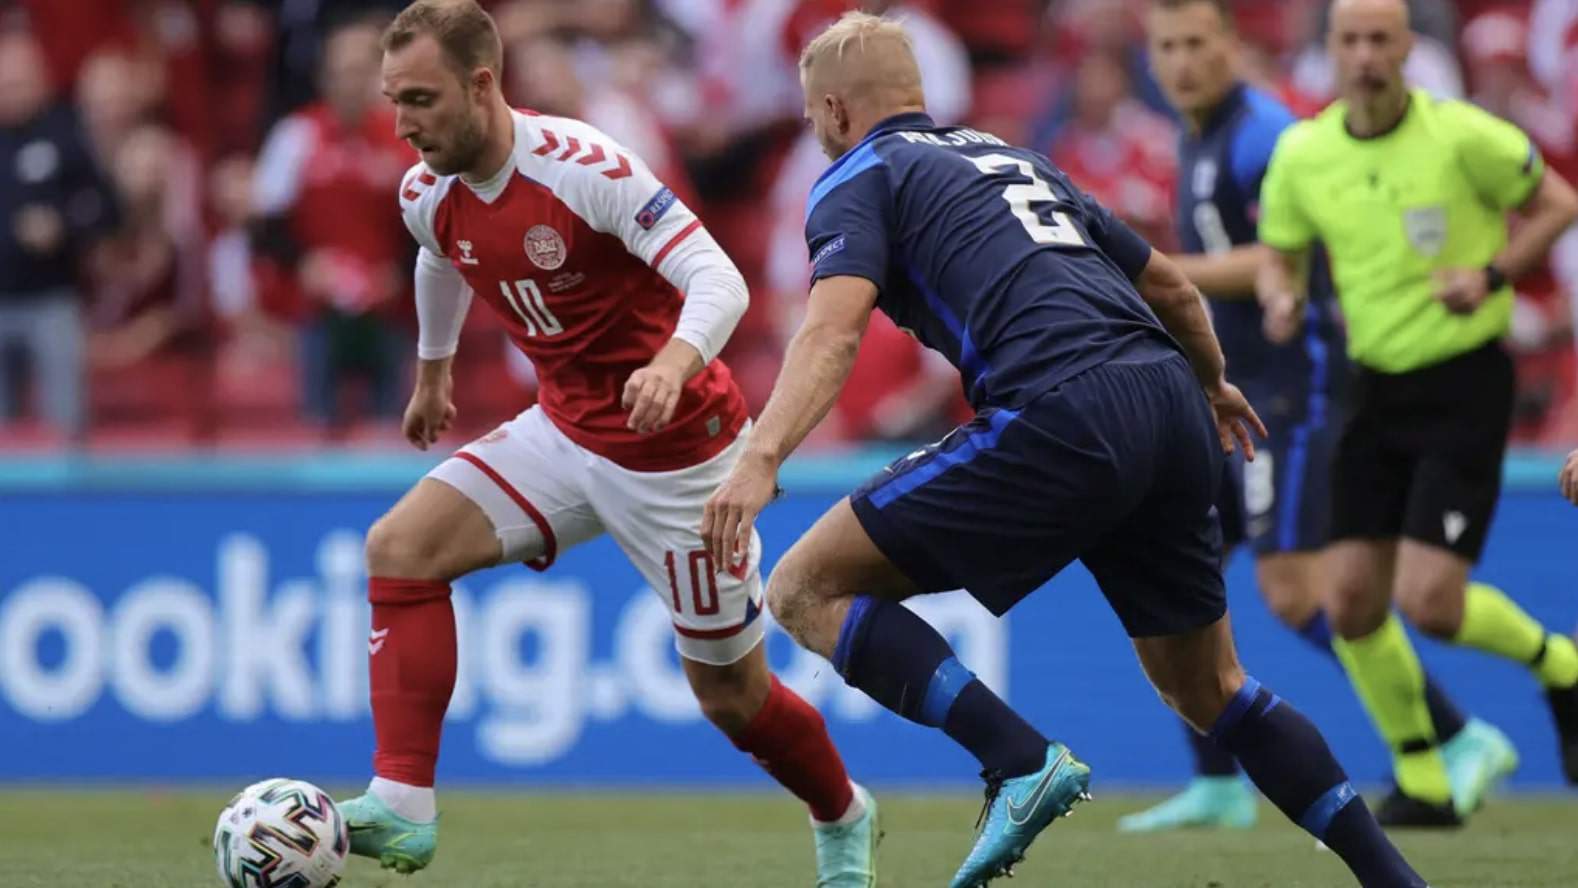 BREAKING: Denmark player Christian Eriksen collapses during Finland match